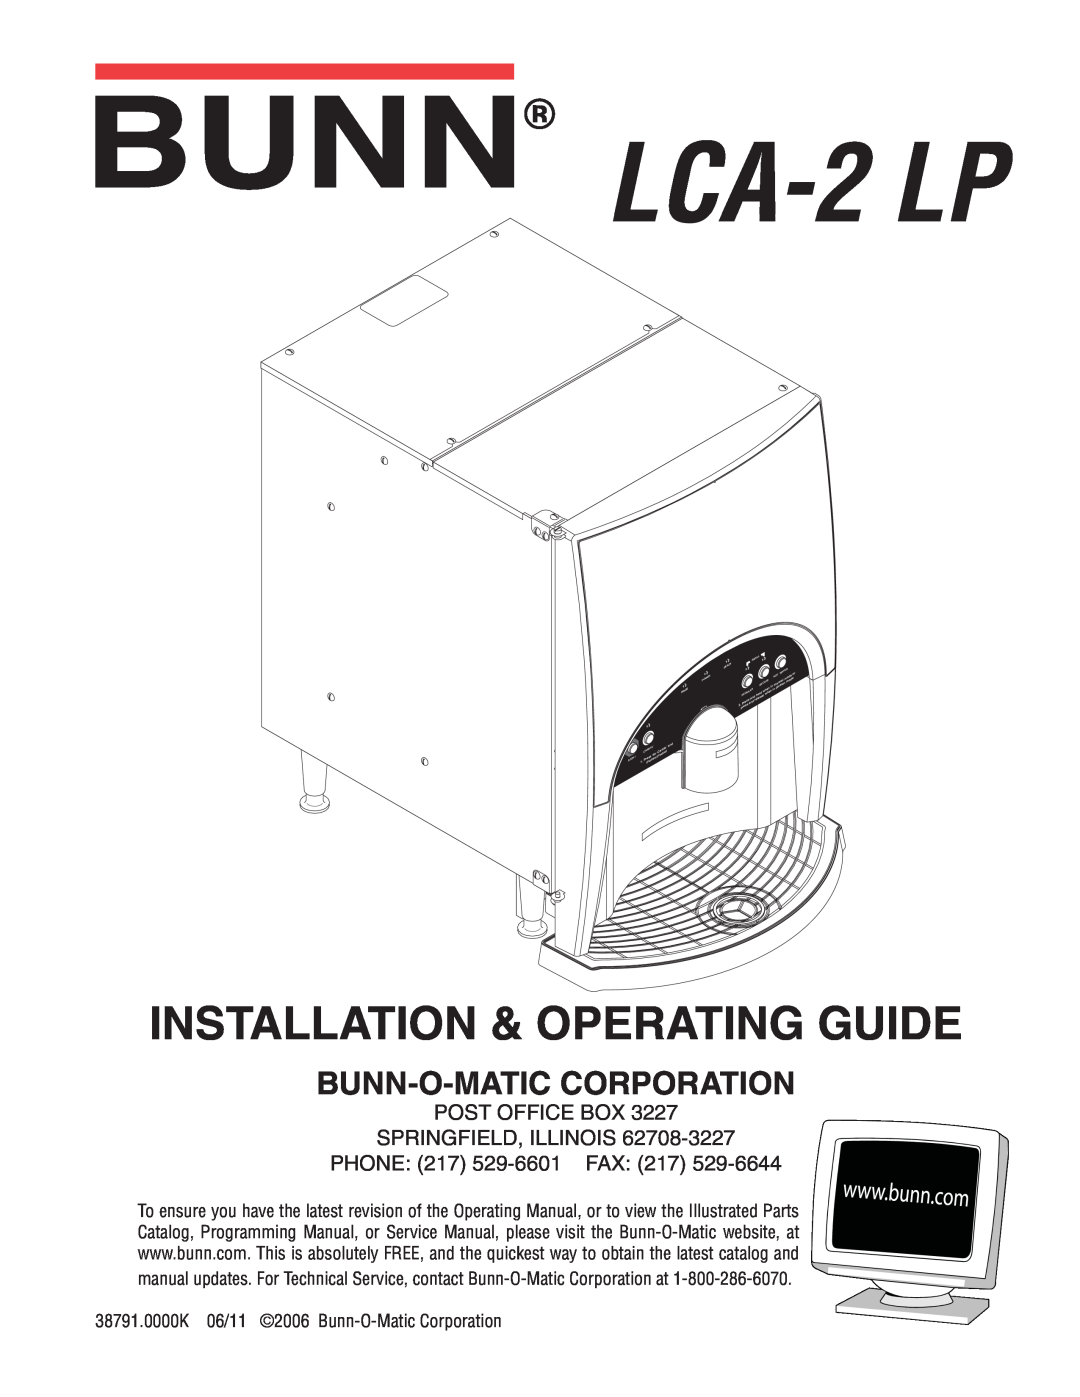 Bunn 38791.0000K service manual LCA-2LP, Installation & Operating Guide, Bunn-O-Maticcorporation 